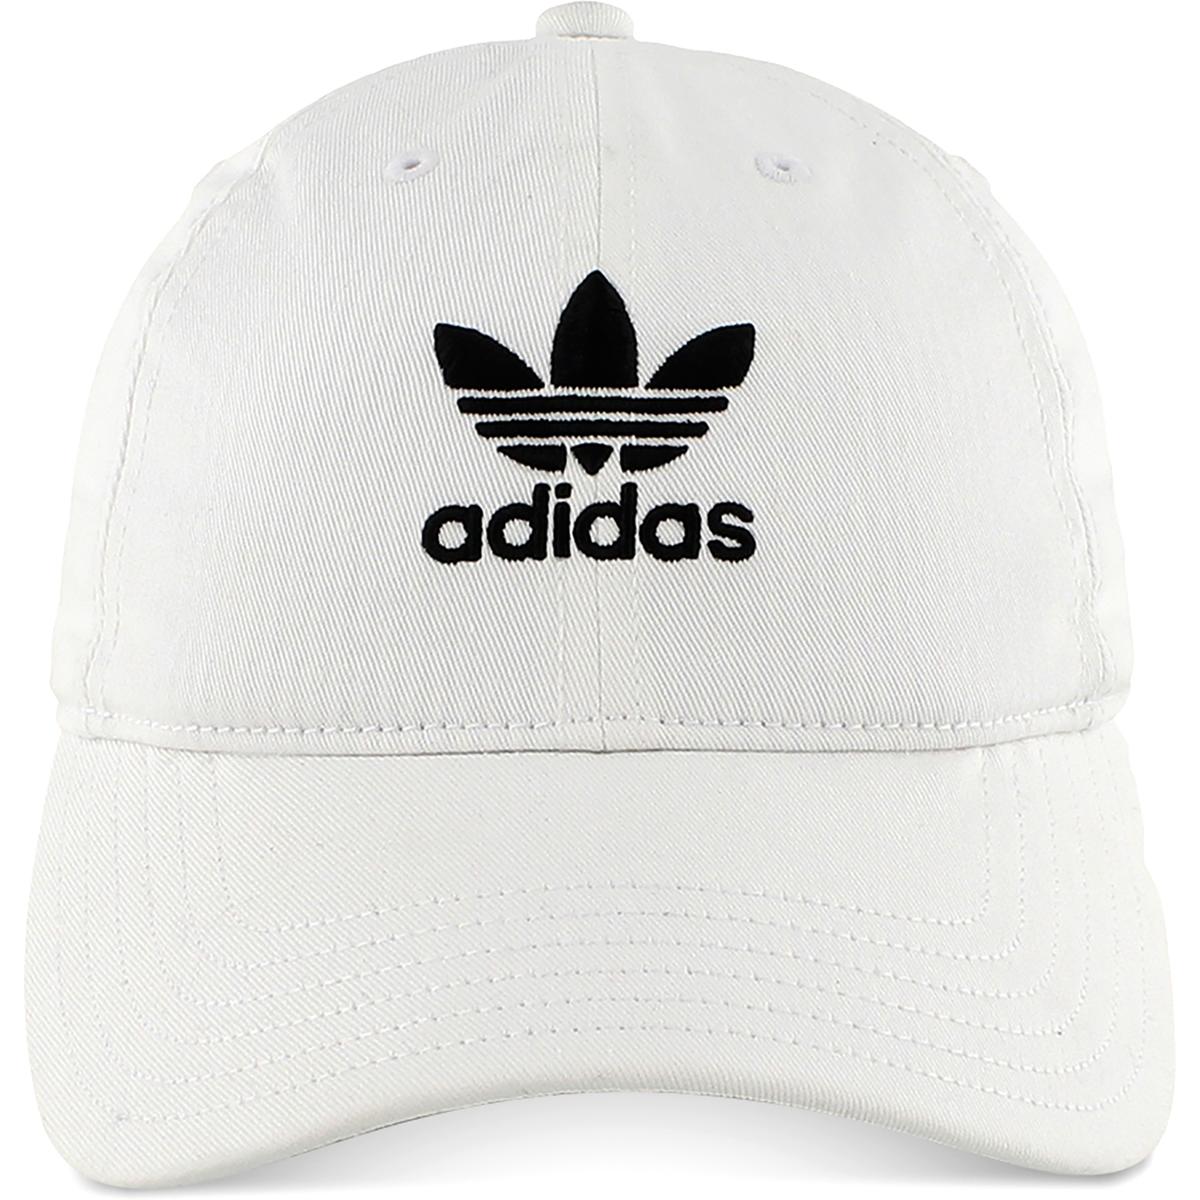 adidas Originals Mens White Logo Adjustable Sports Ball Cap Hat O/S ...